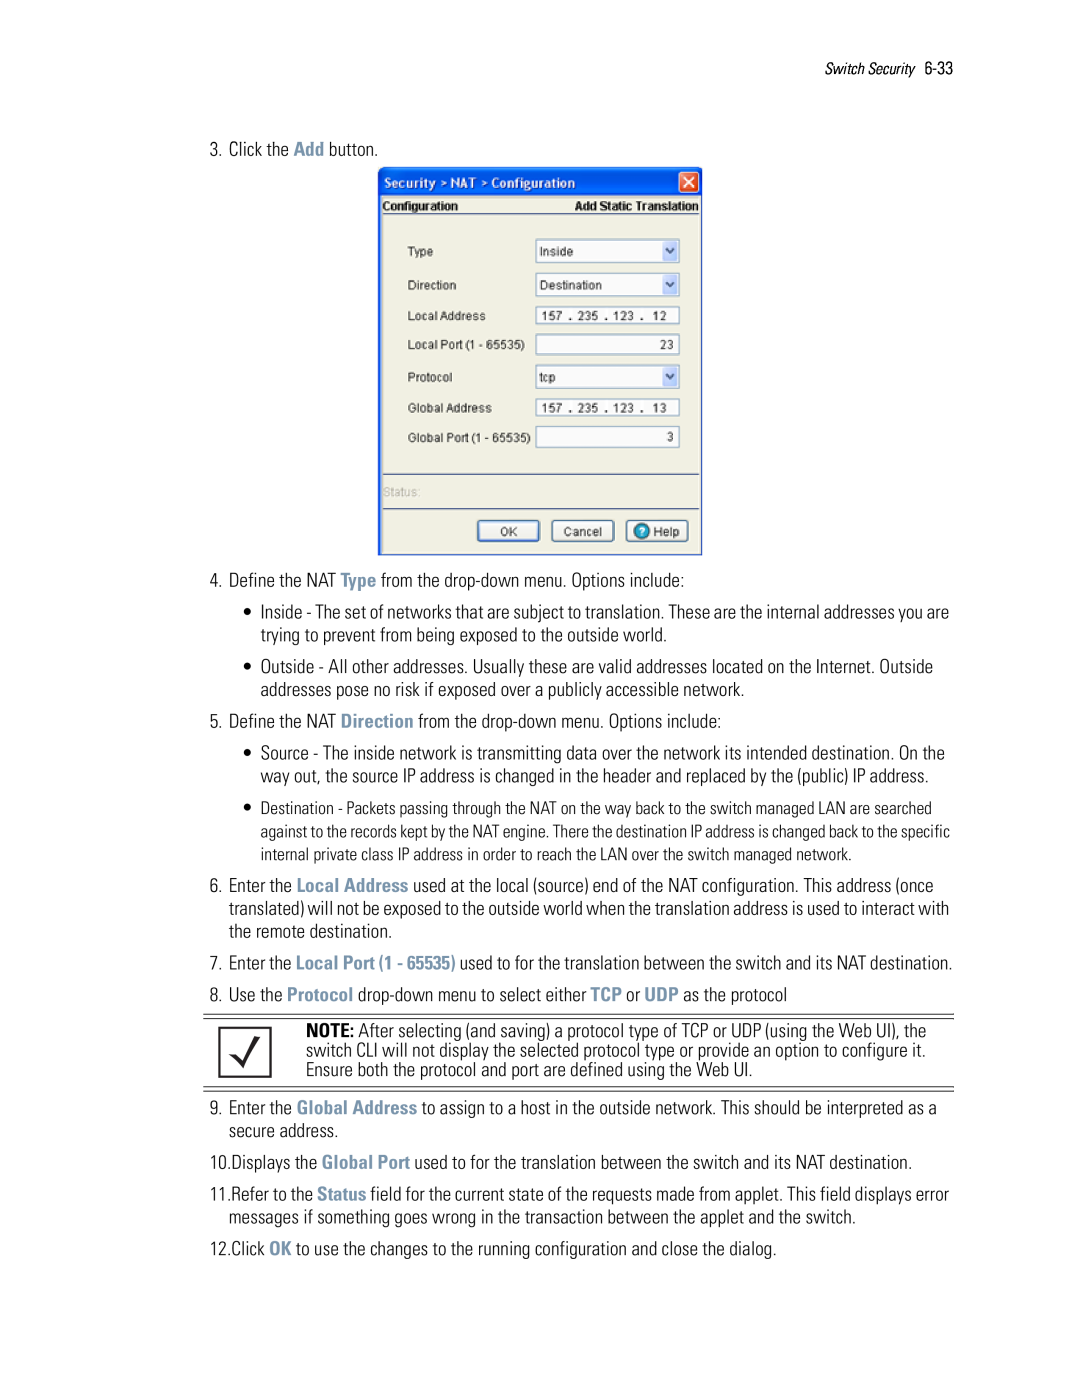 Motorola WS5100 manual Click the Add button 